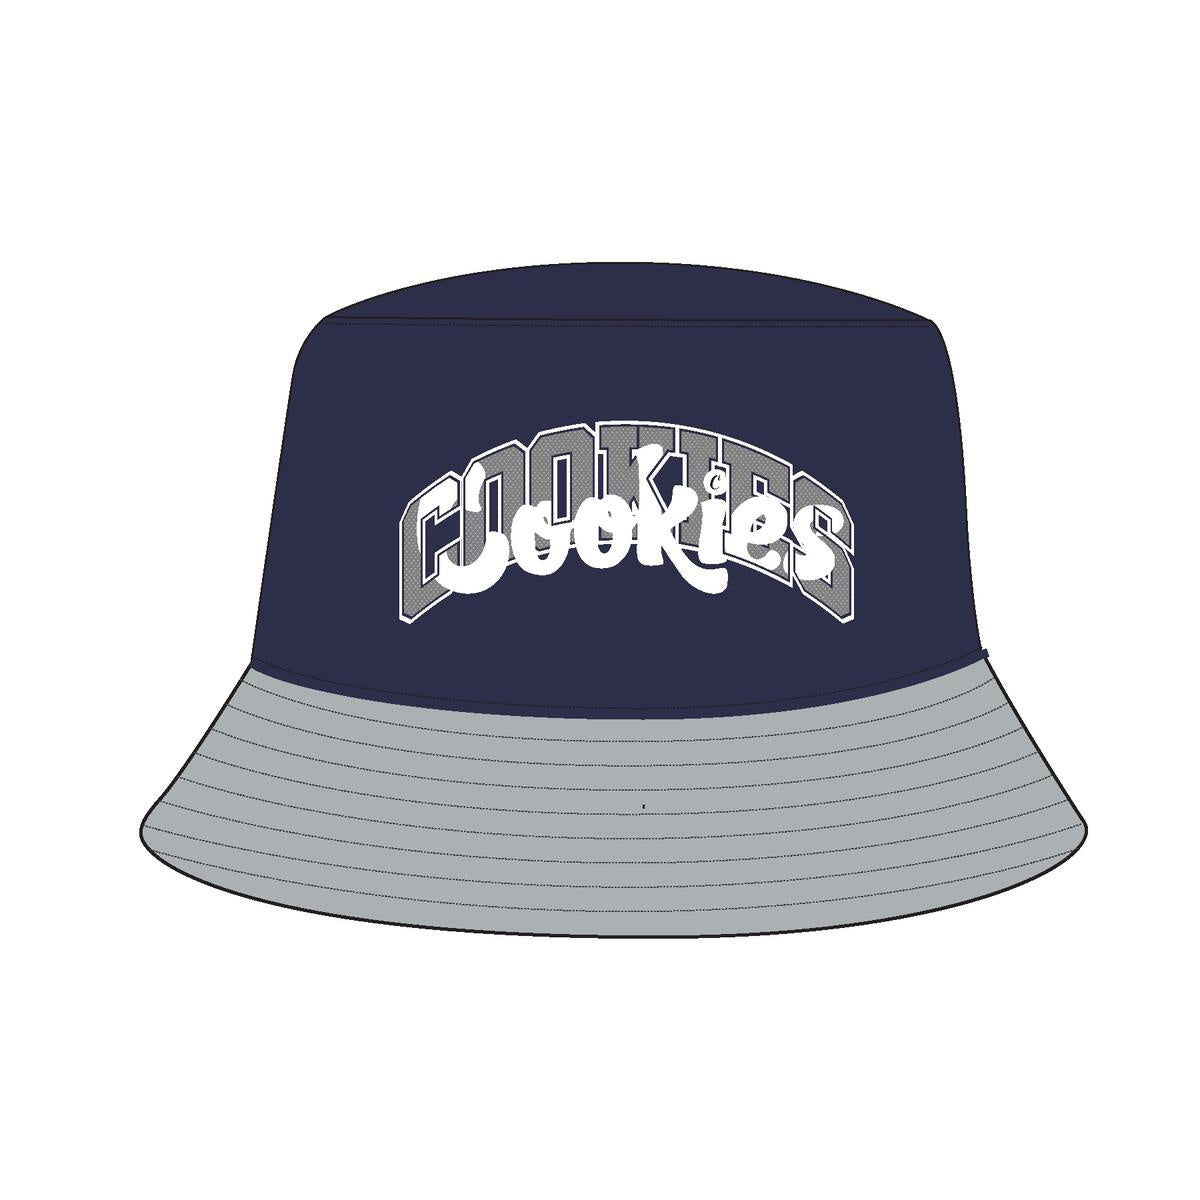 Cookies Loud Pack Navy Bucket Hat (1557X5863)